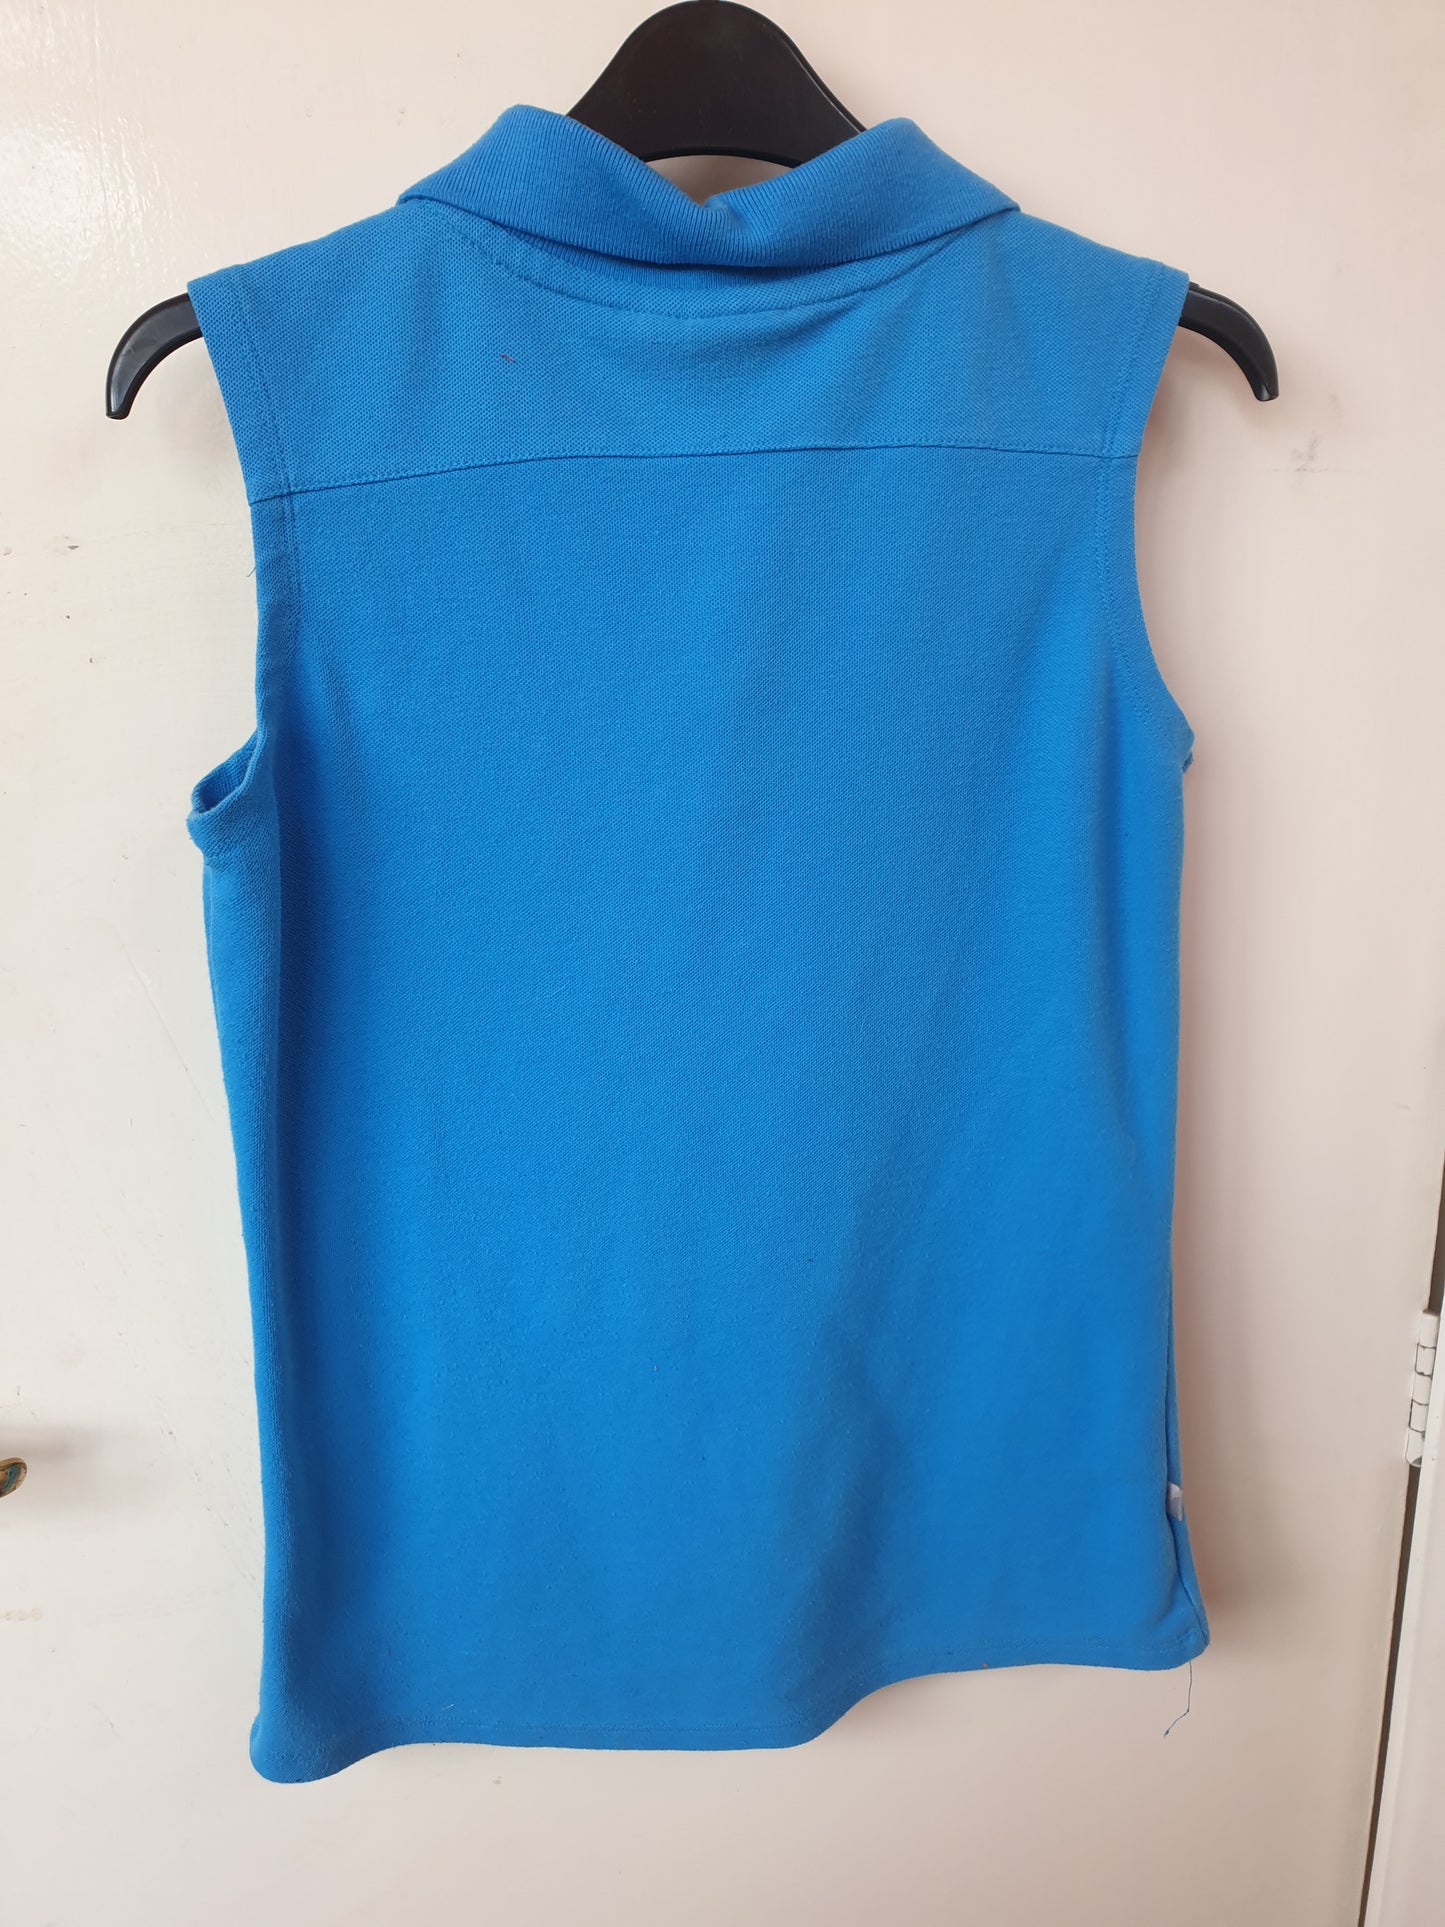 Blue LA Gear sleeveless polo shirt FREE POSTAGE ✅